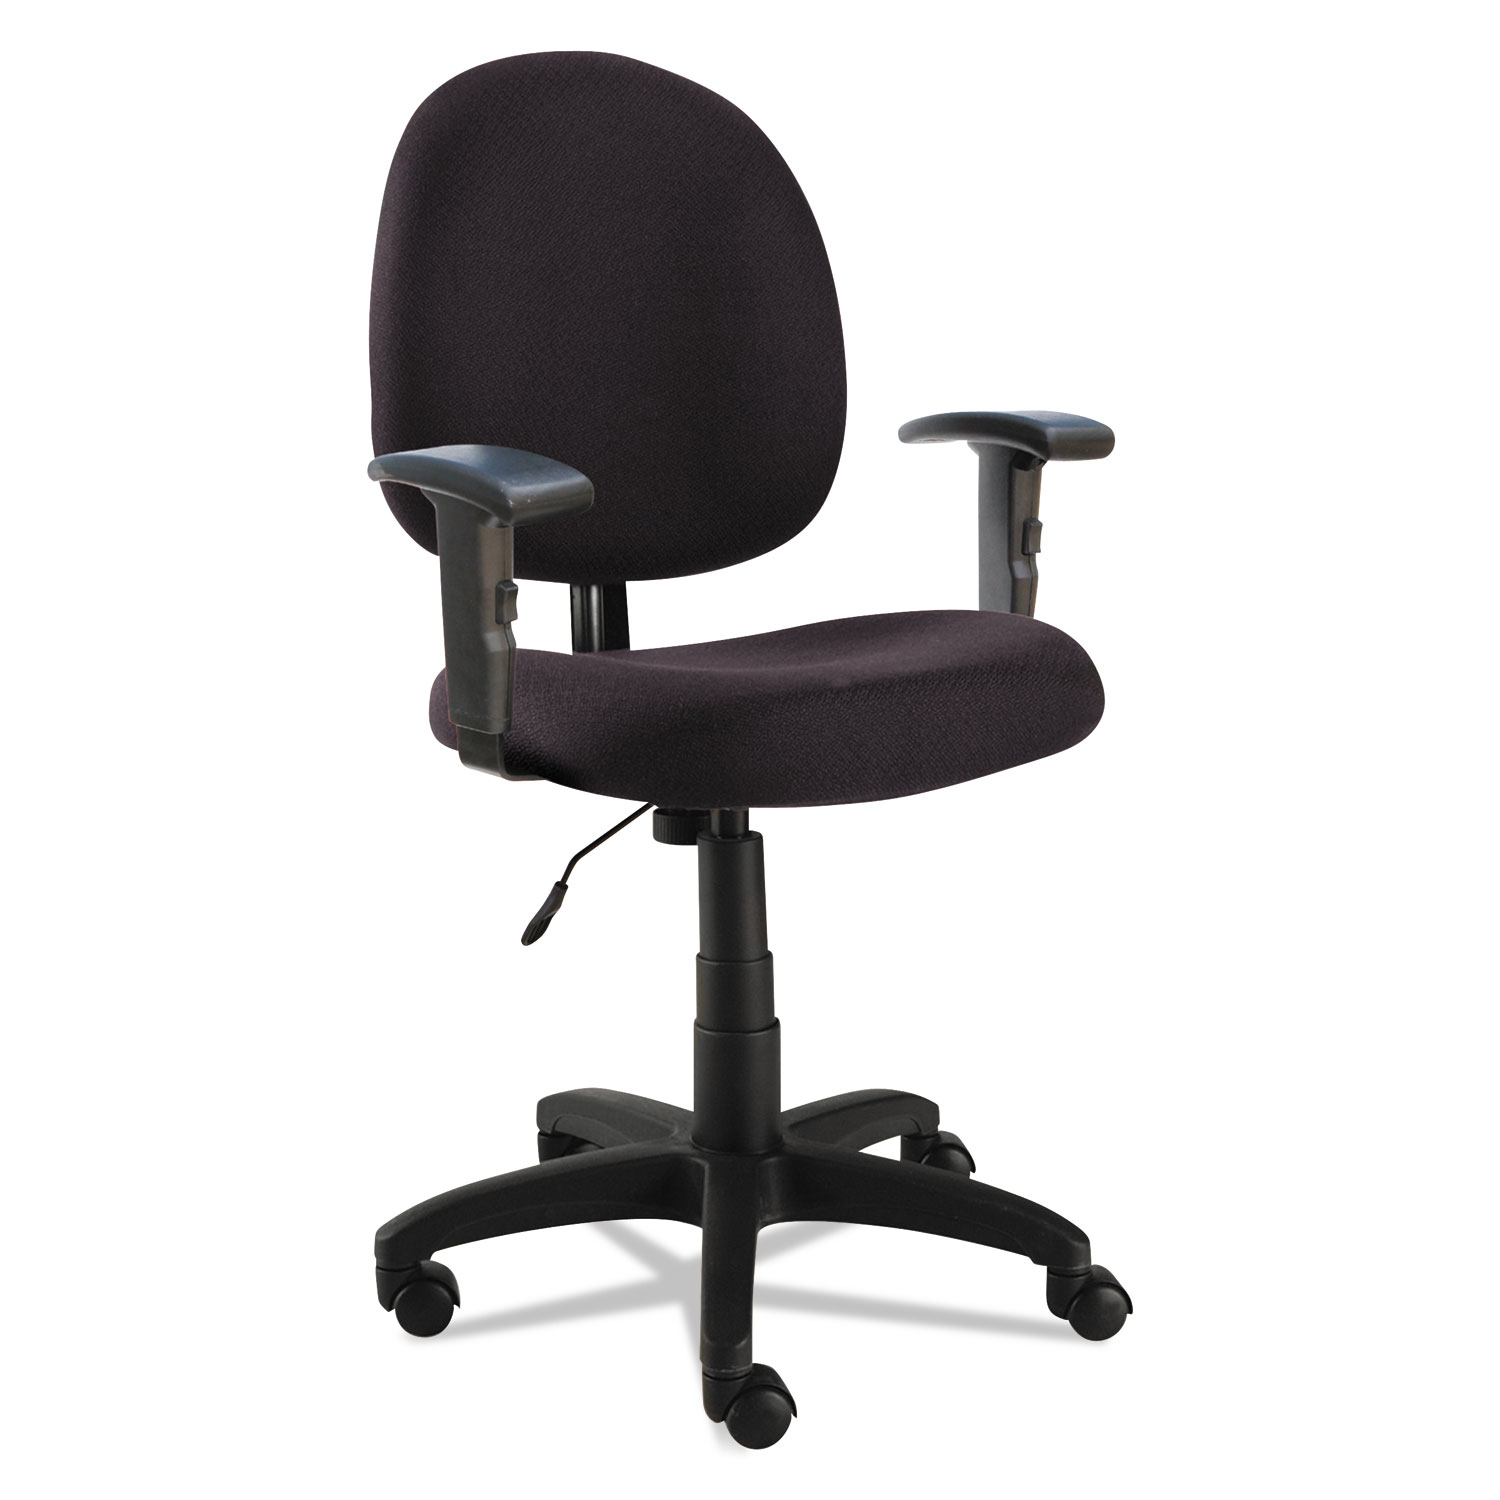  Alera ALEVTA4810 Alera Essentia Series Swivel Task Chair with Adjustable Arms, Supports up to 275 lbs., Black Seat/Black Back, Black Base (ALEVTA4810) 